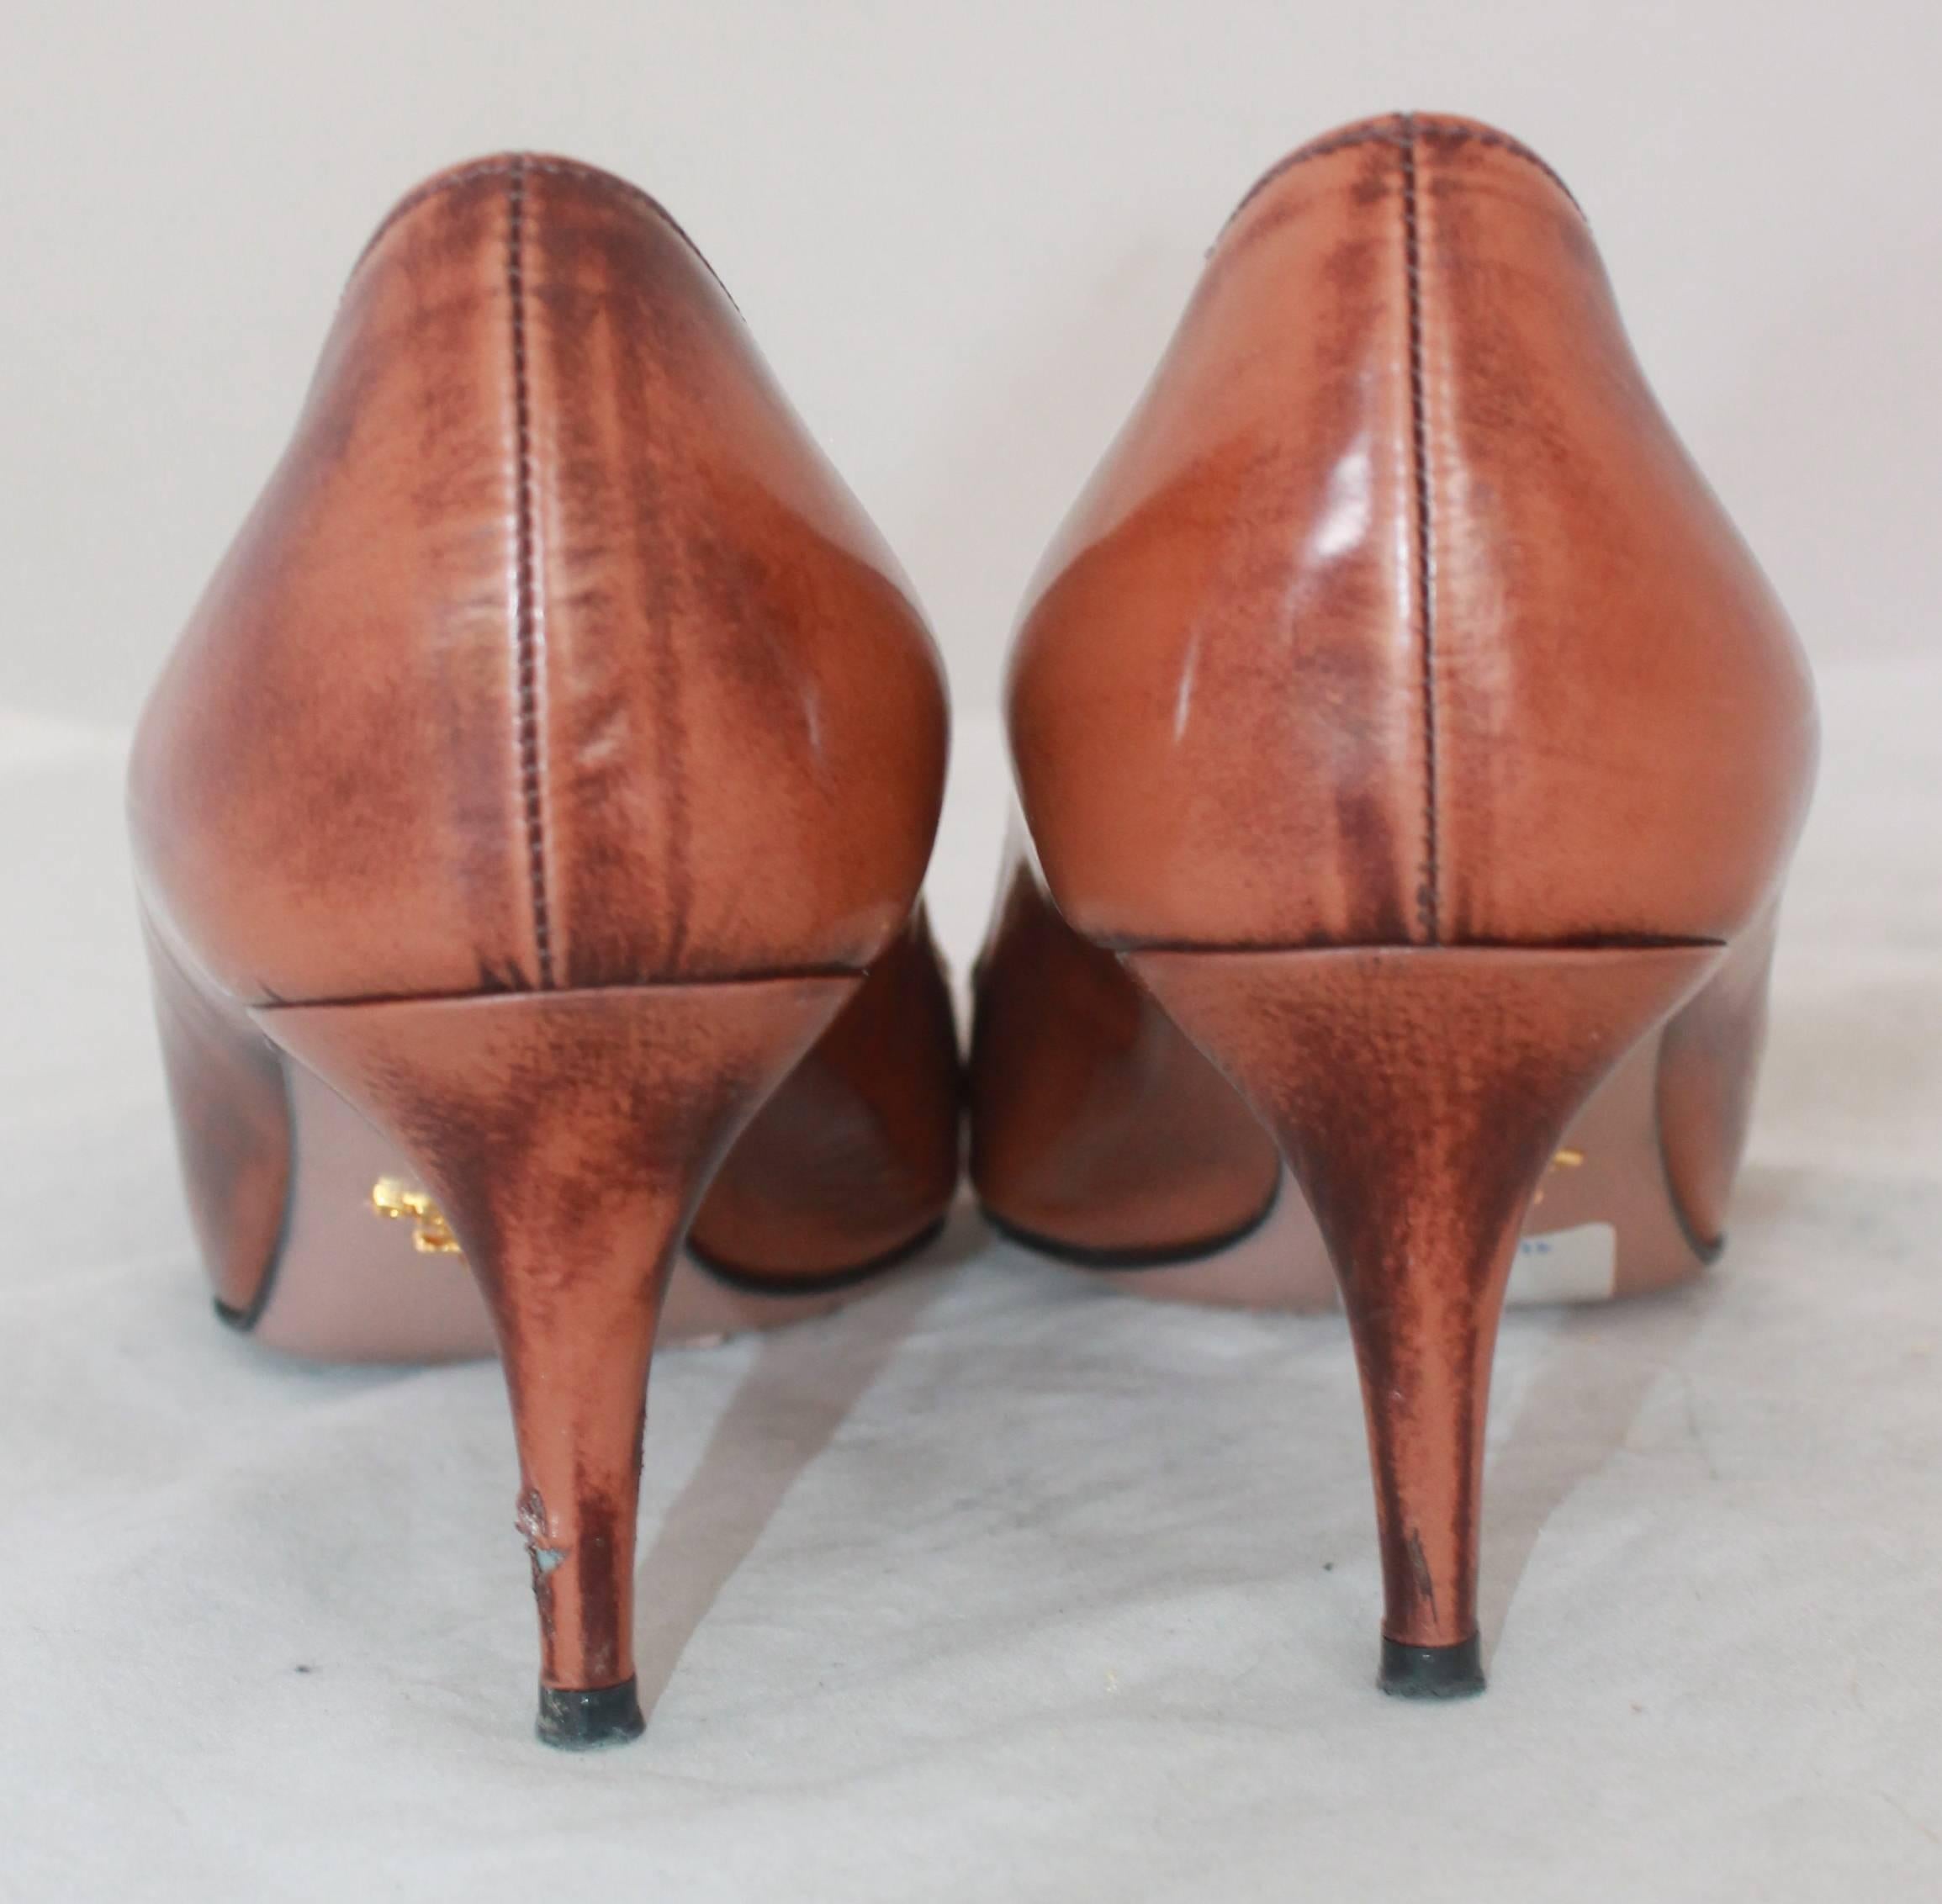 brown low heels